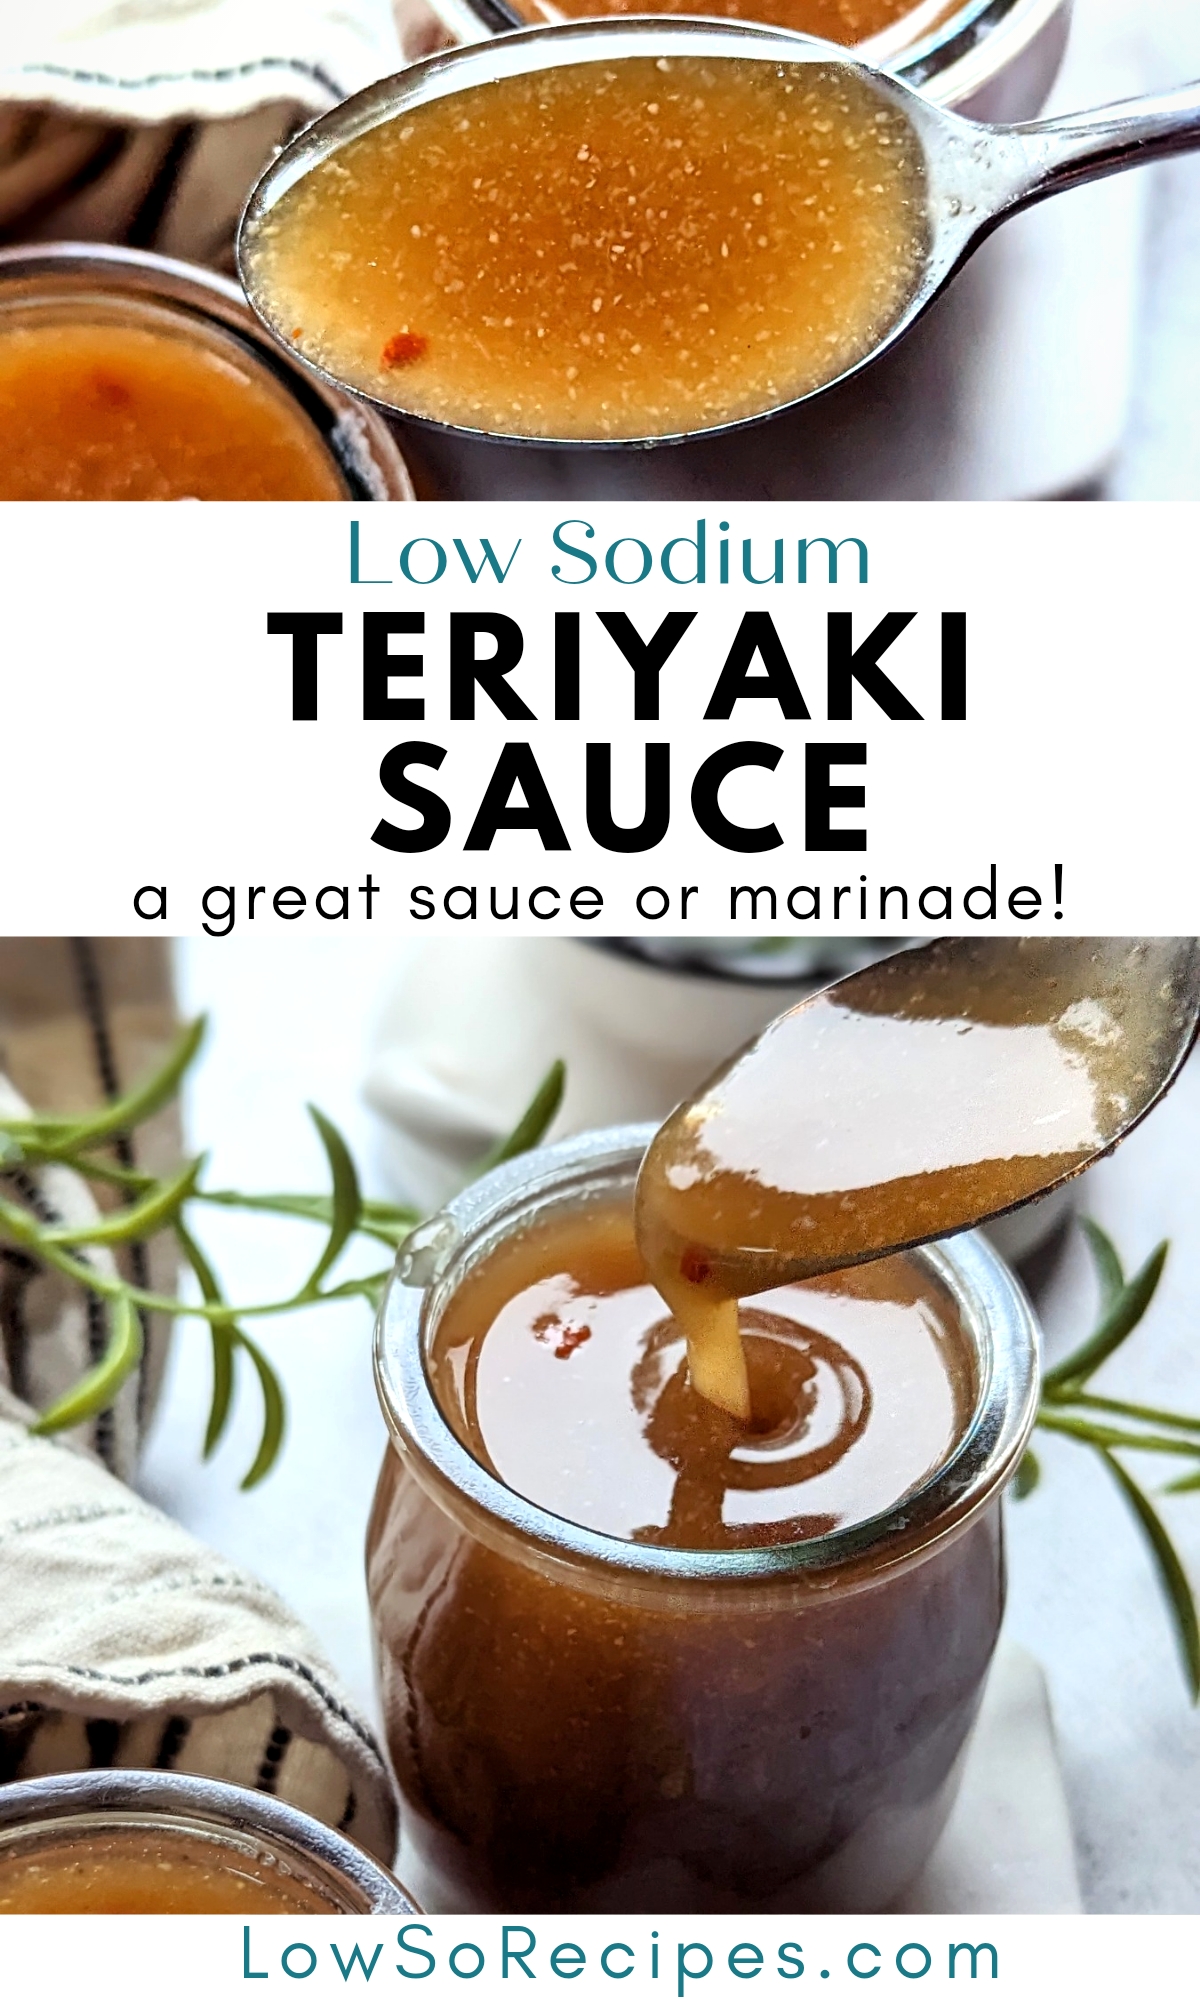 low sodium teriyaki sauce recipe an easy low salt sauce asian inspired teriyaki without much salt